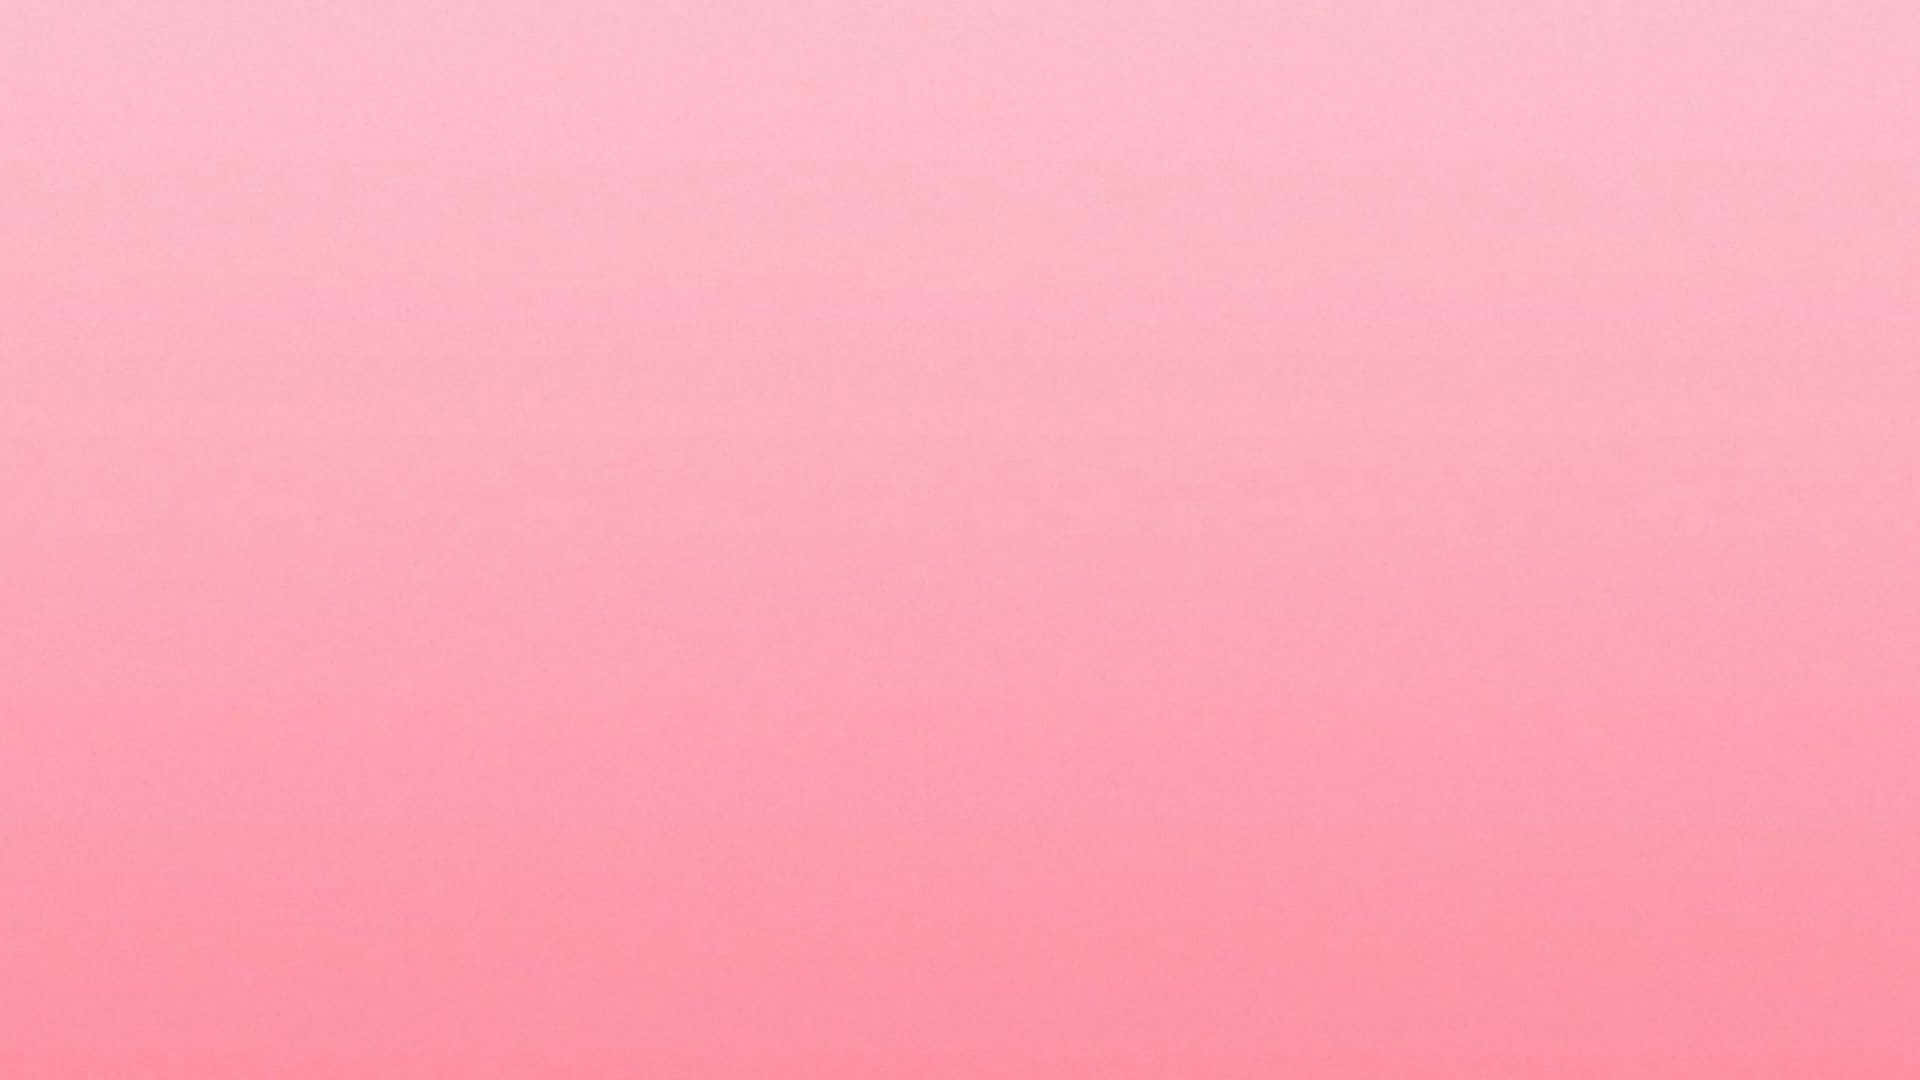 A Plain Pink Desktop for Your Home Office Wallpaper